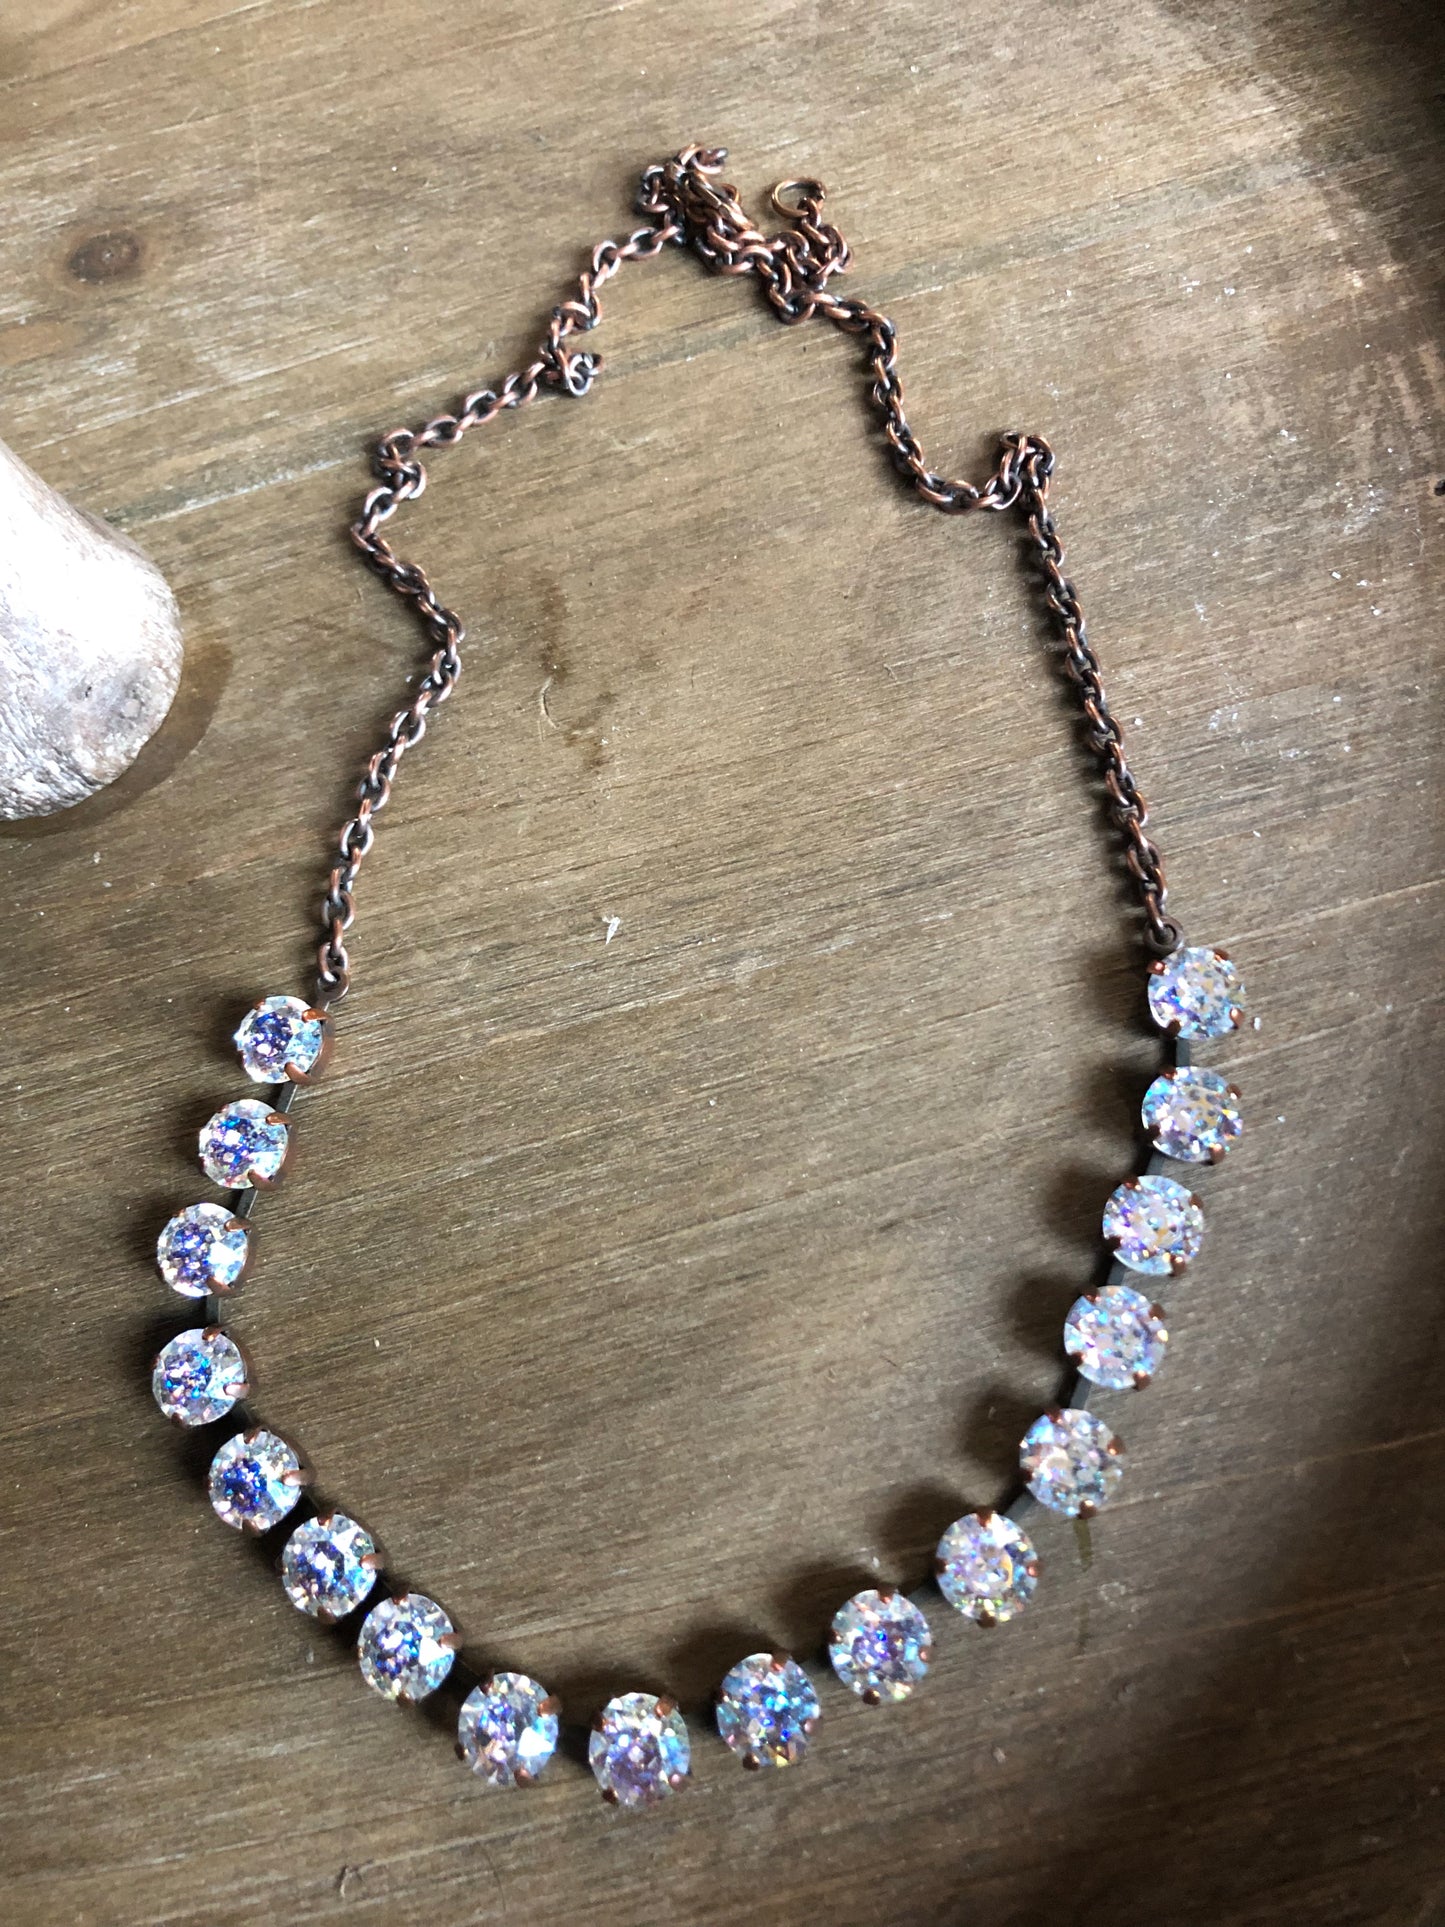 Patina necklace